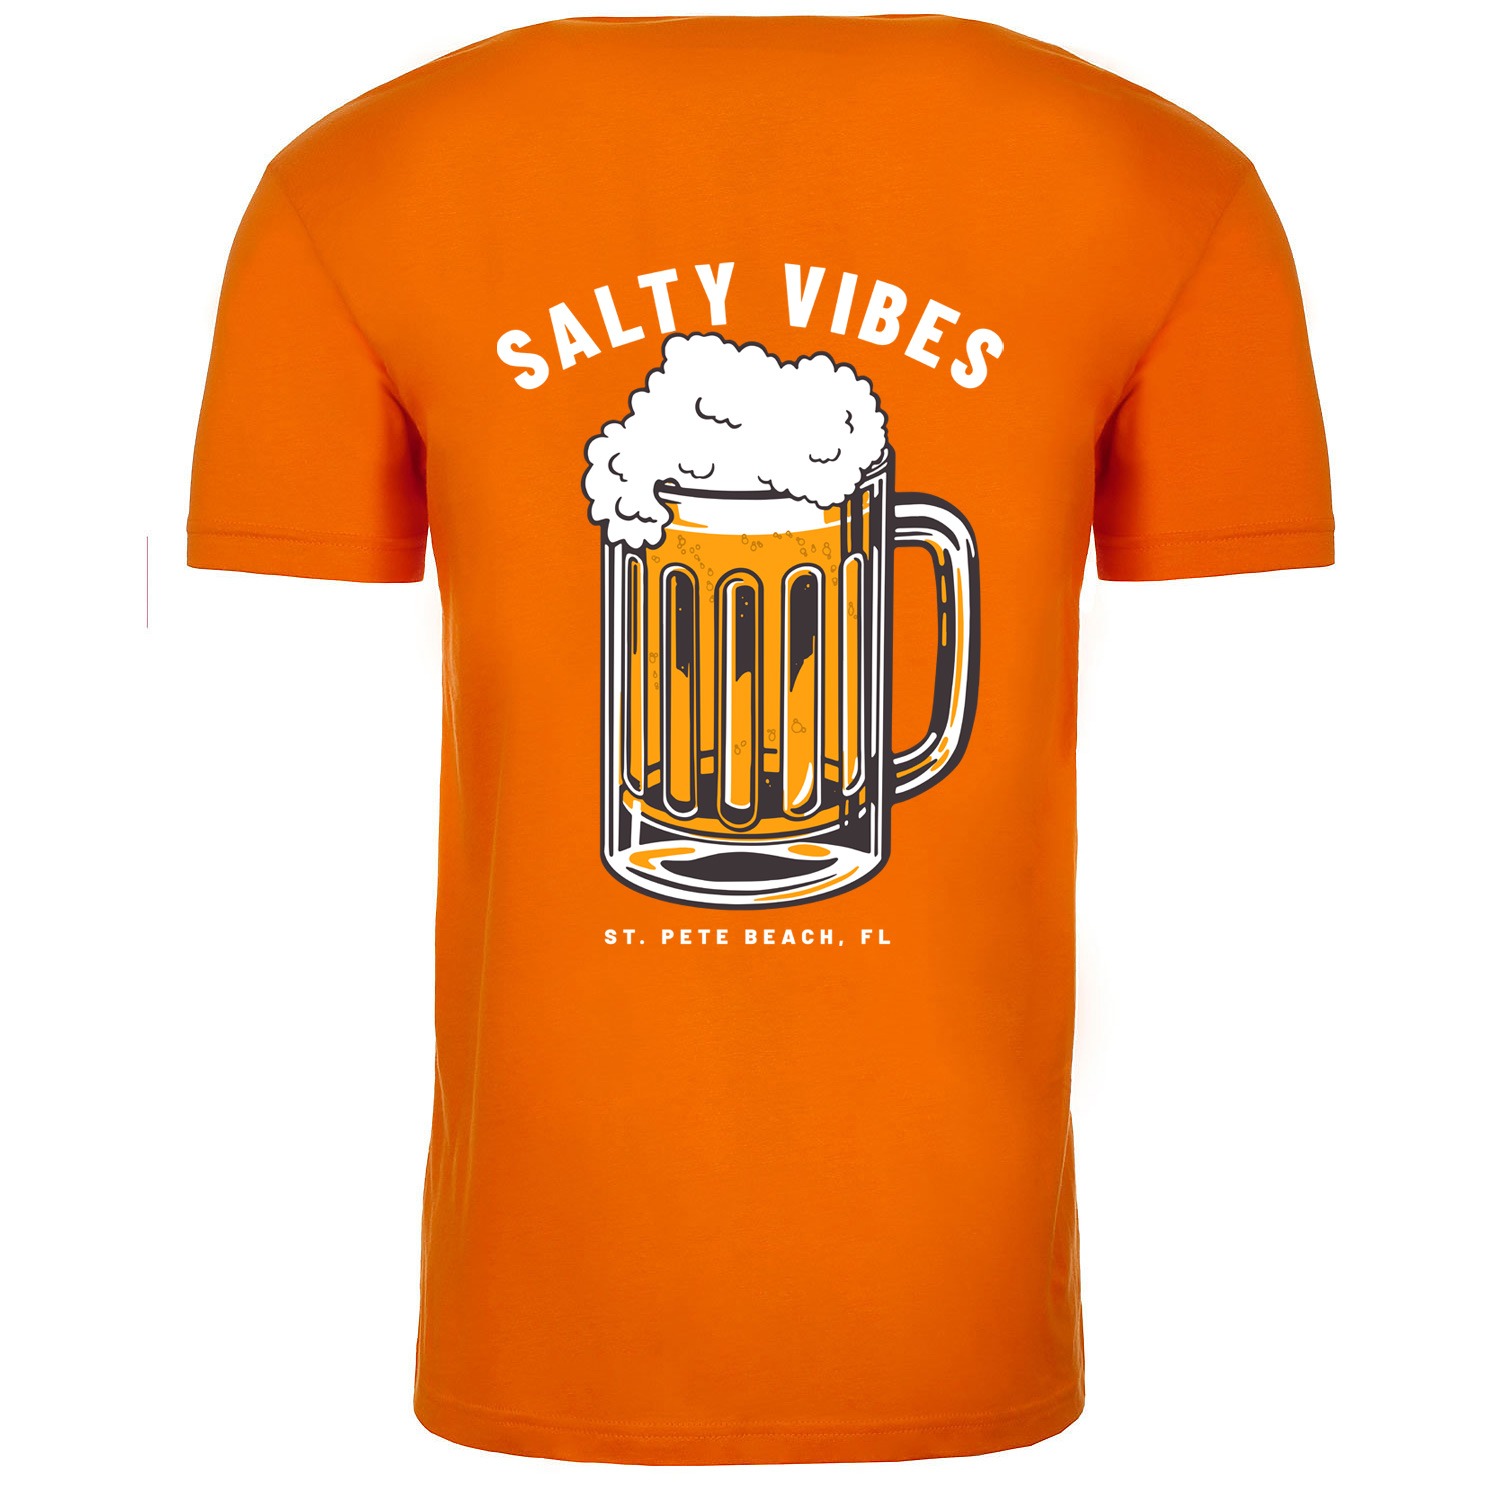 Salty Vibes Beer Unisex T-Shirt - Orange, 2XL